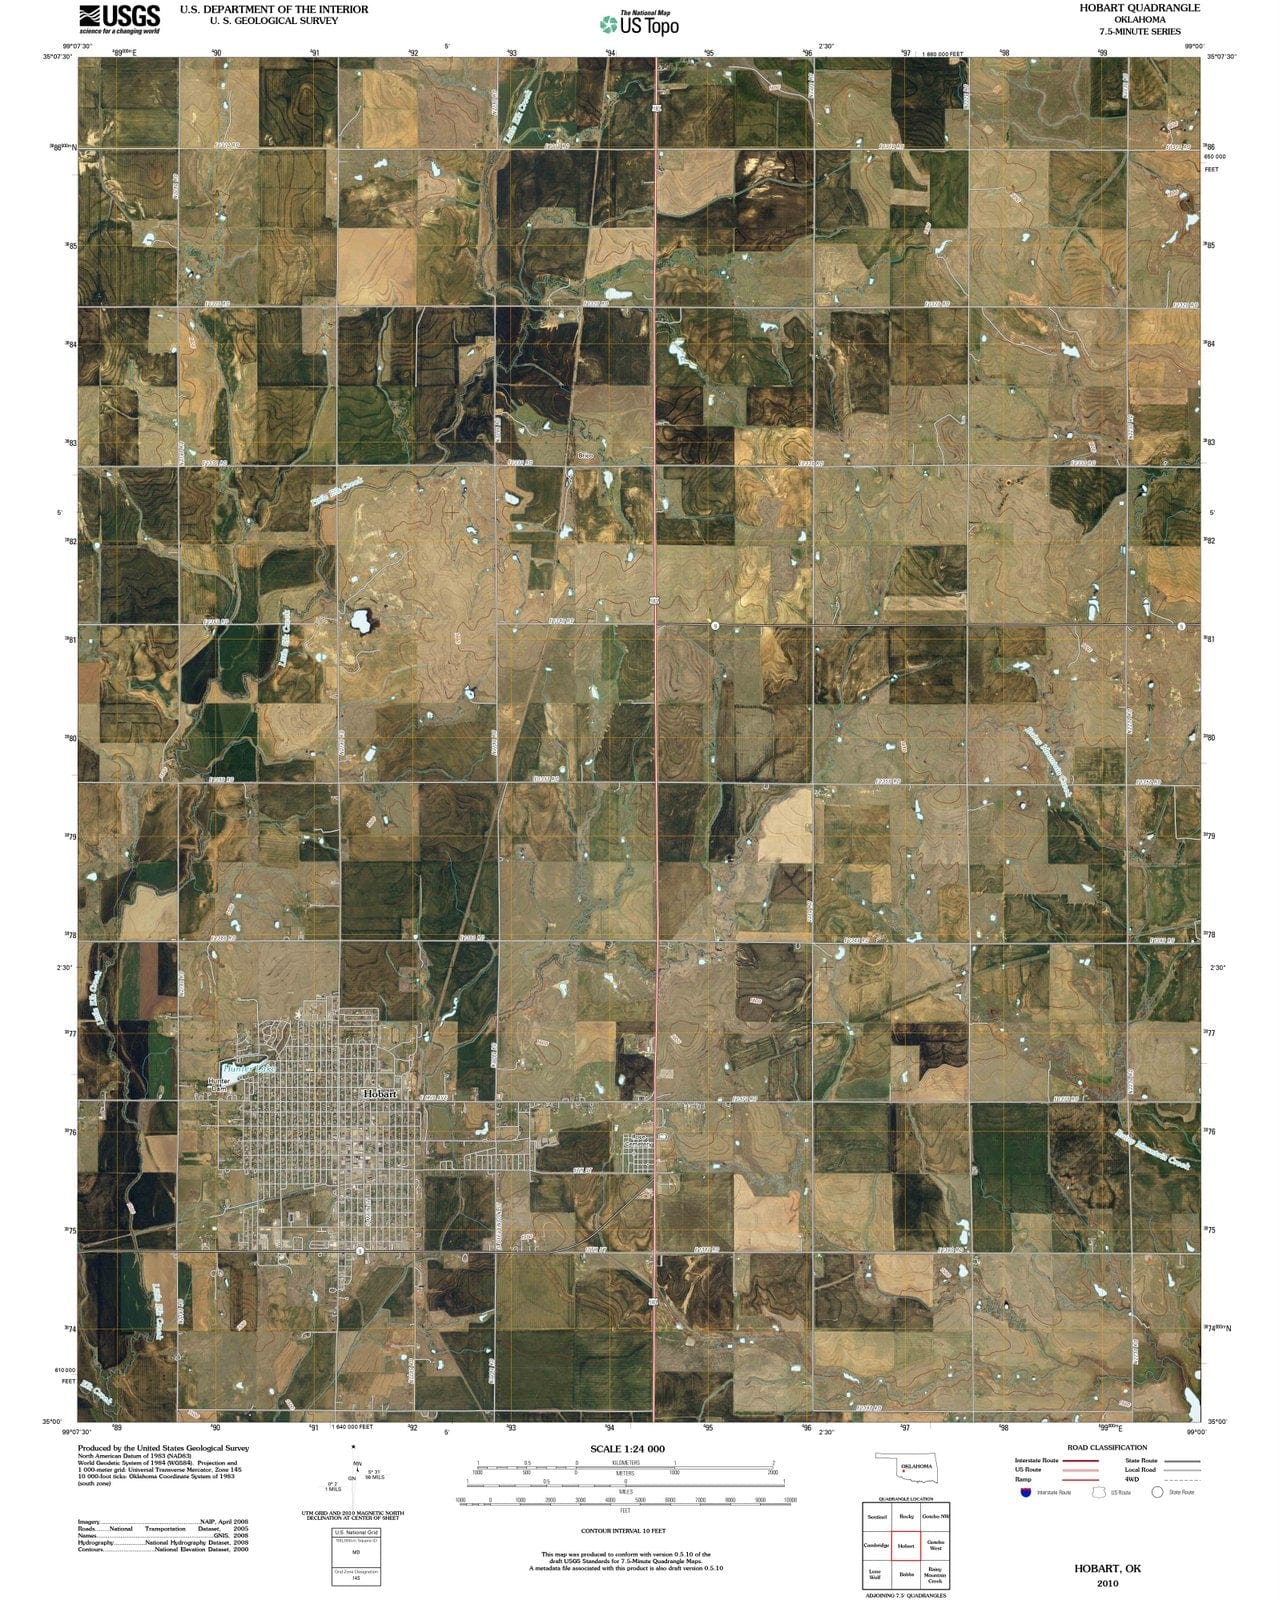 2010 Hobart, OK - Oklahoma - USGS Topographic Map